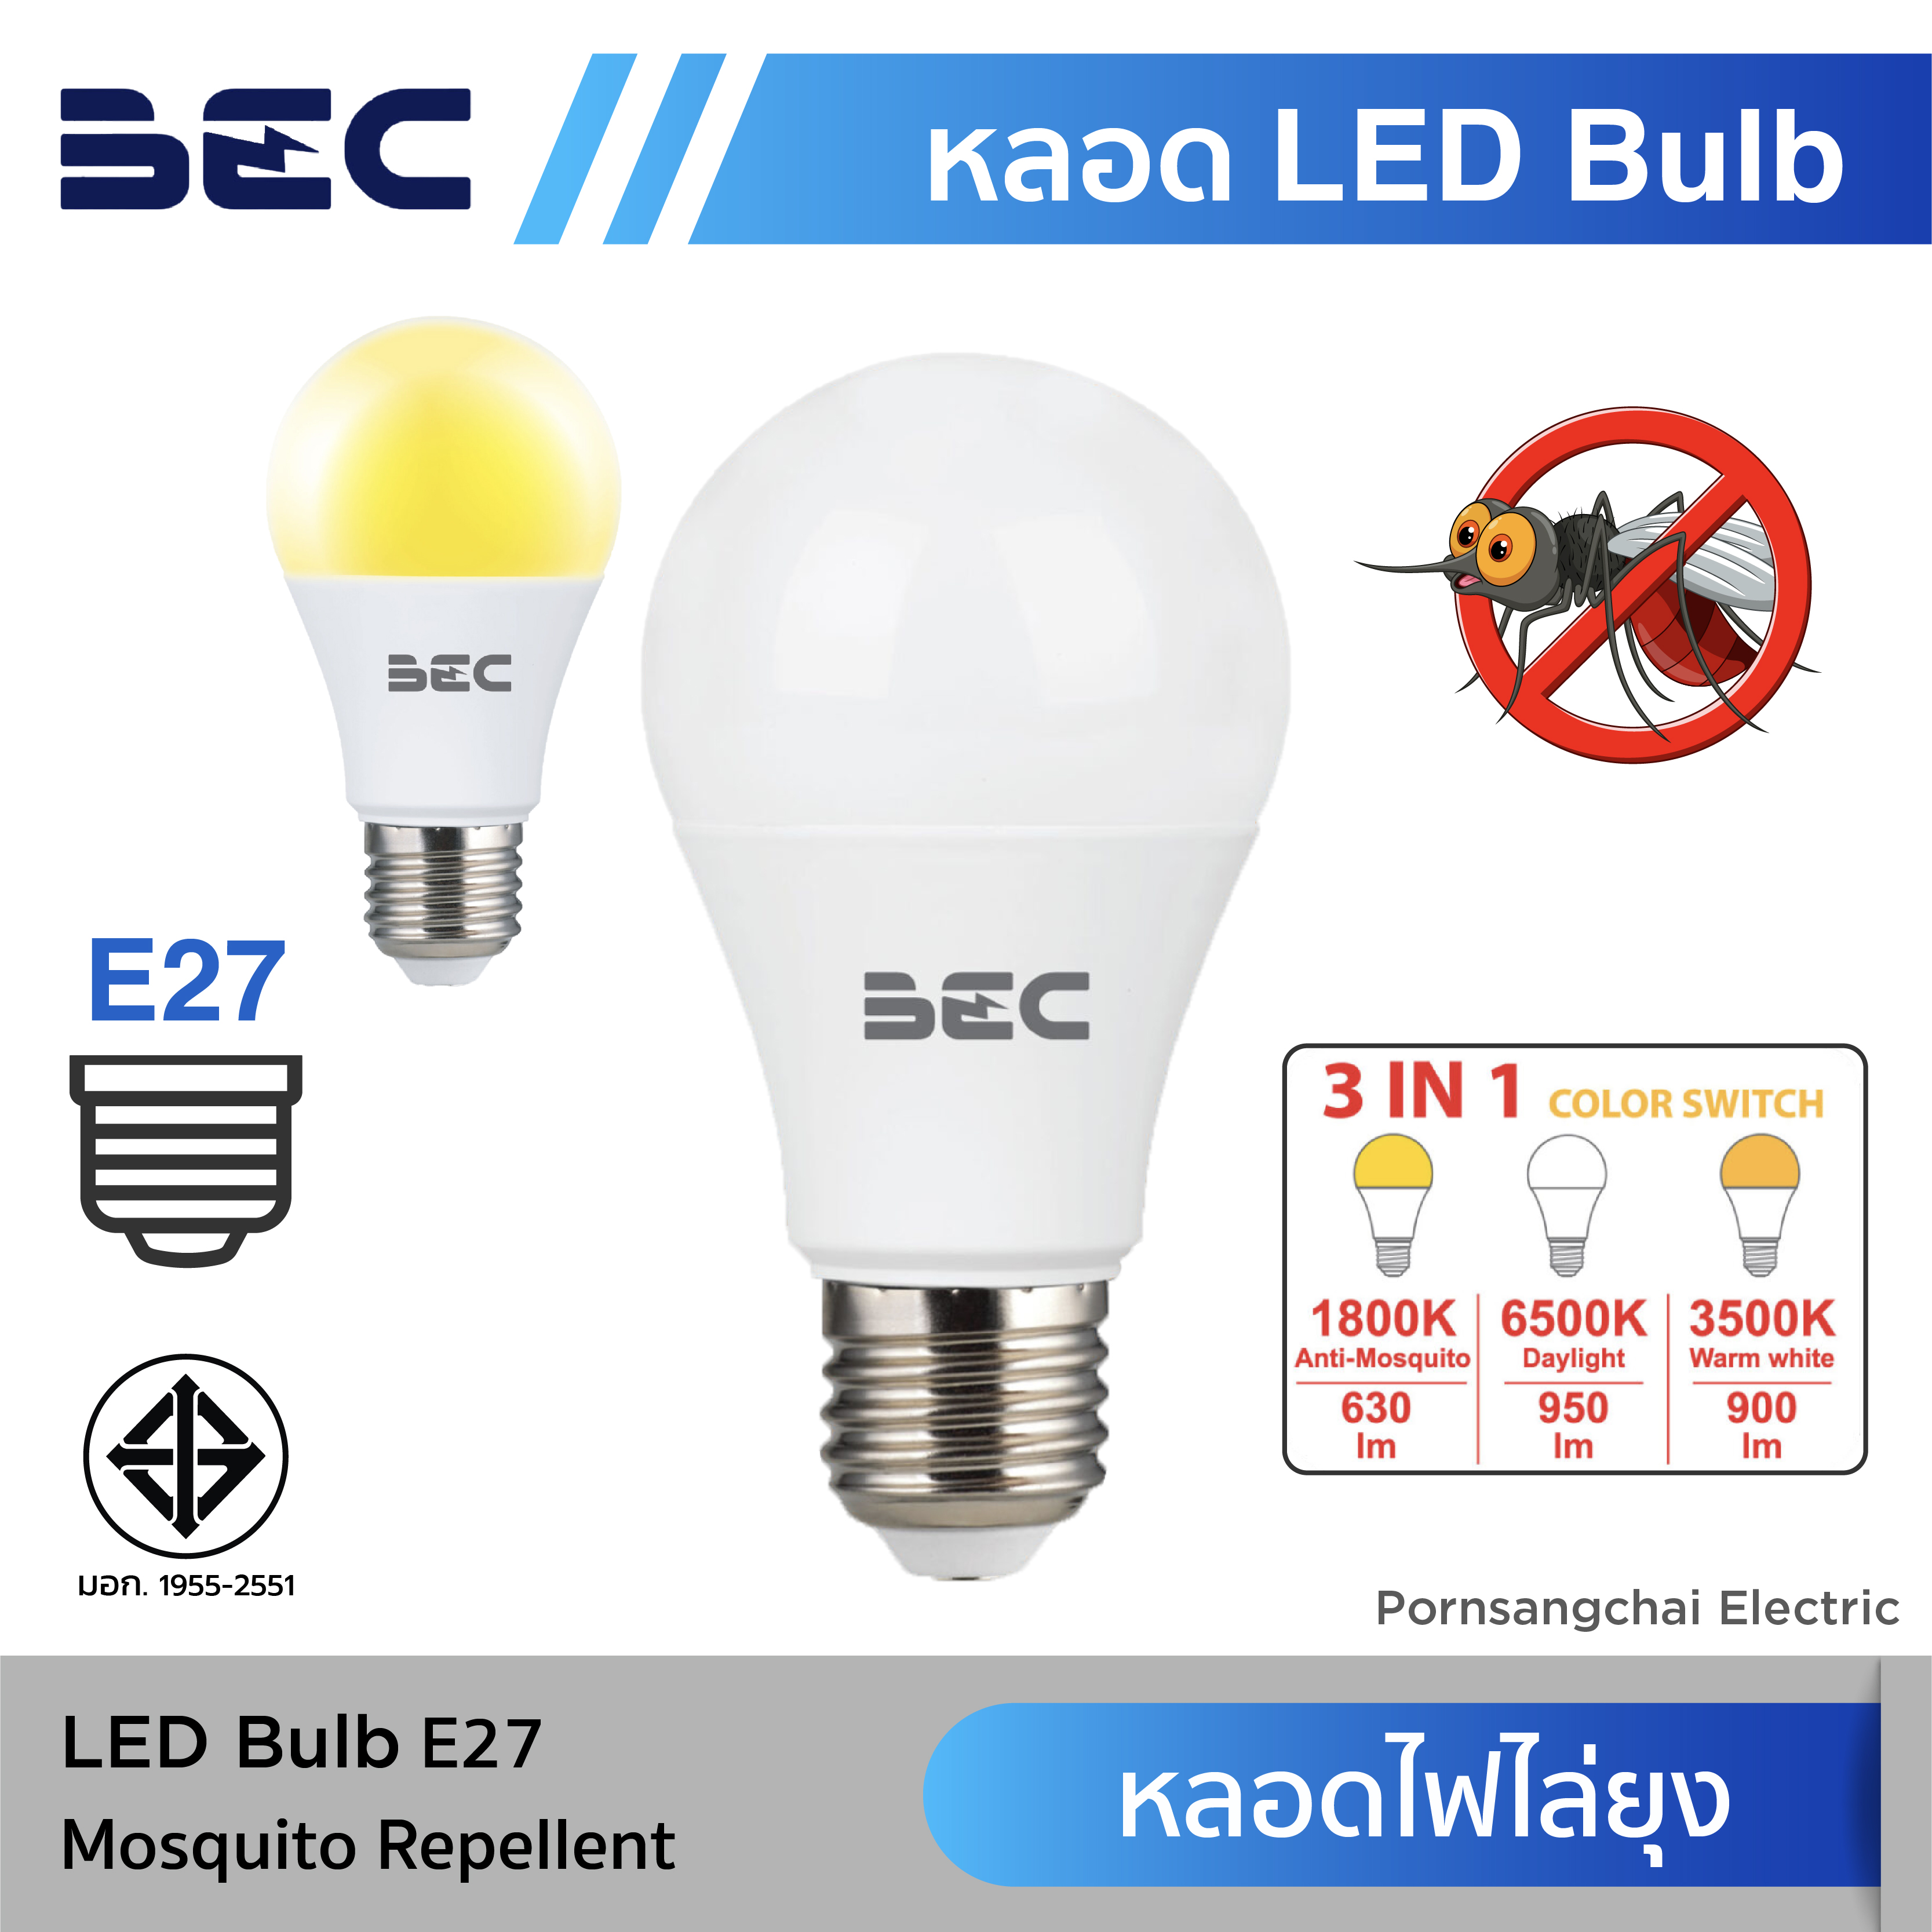 LED Bulb BEC - Mosquito Repellent